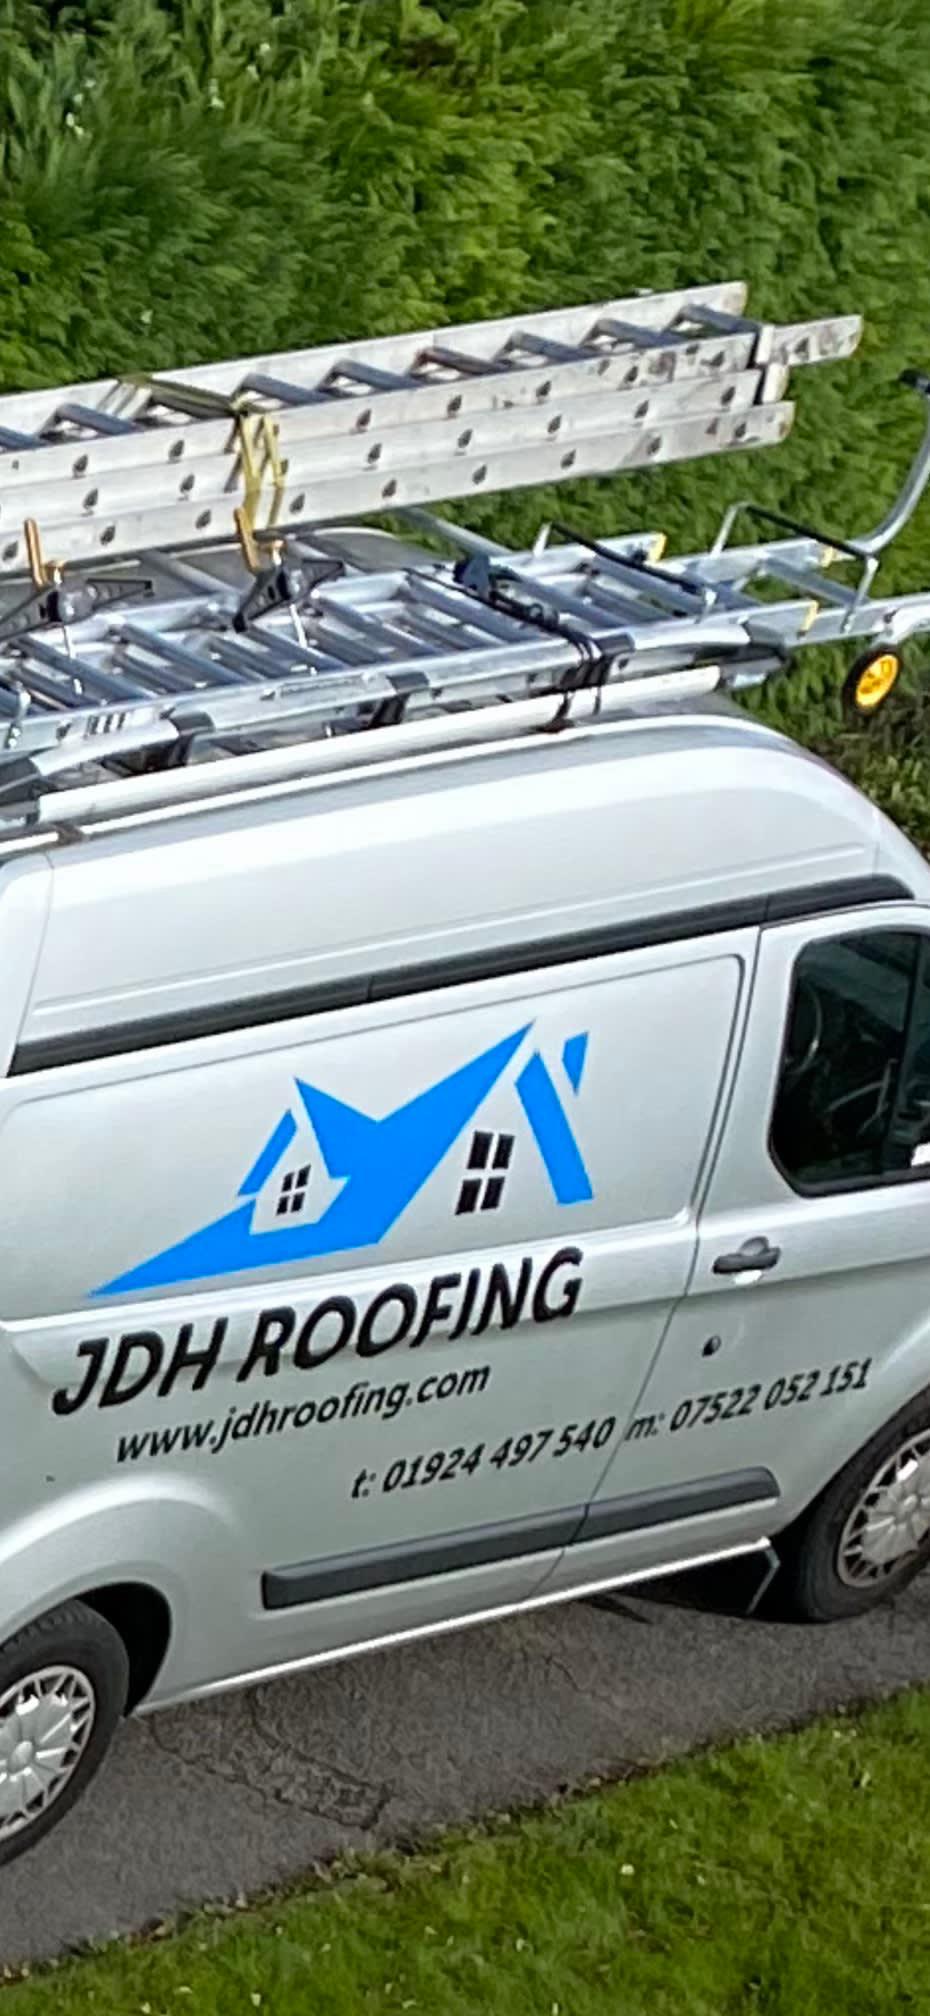 JDH Roofing Mirfield 07522 052151